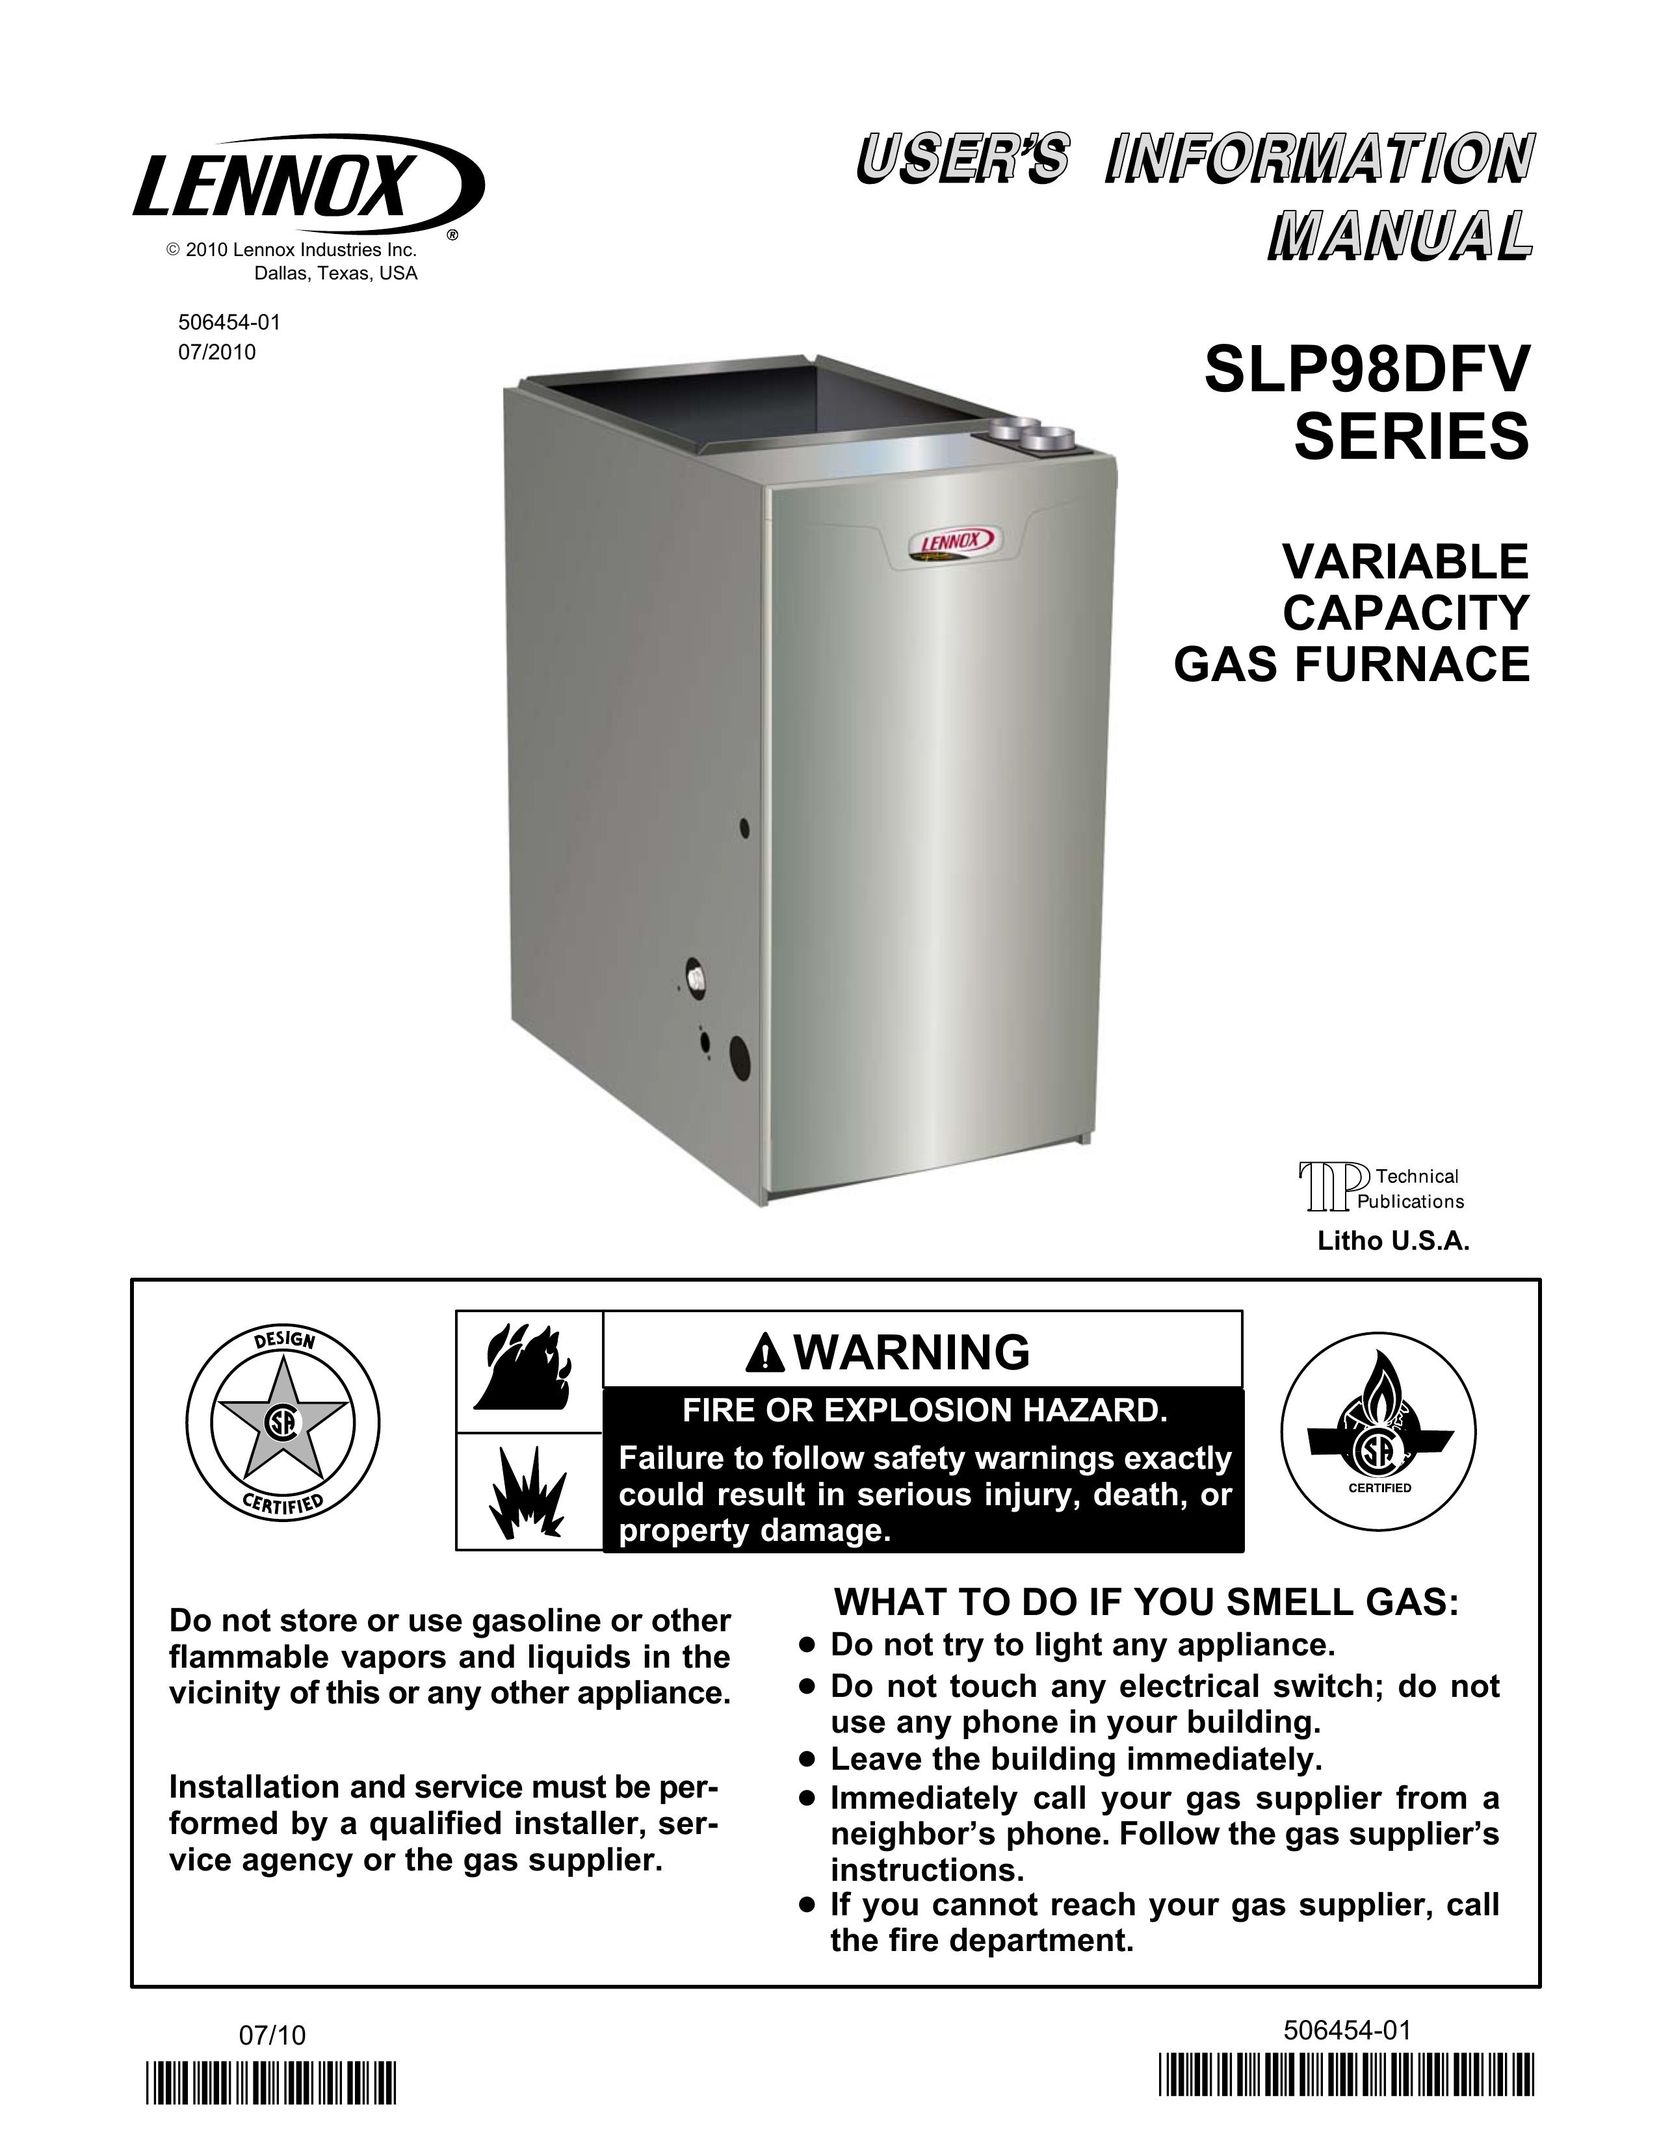 Lennox International Inc. SLP98DFV Gas Heater User Manual